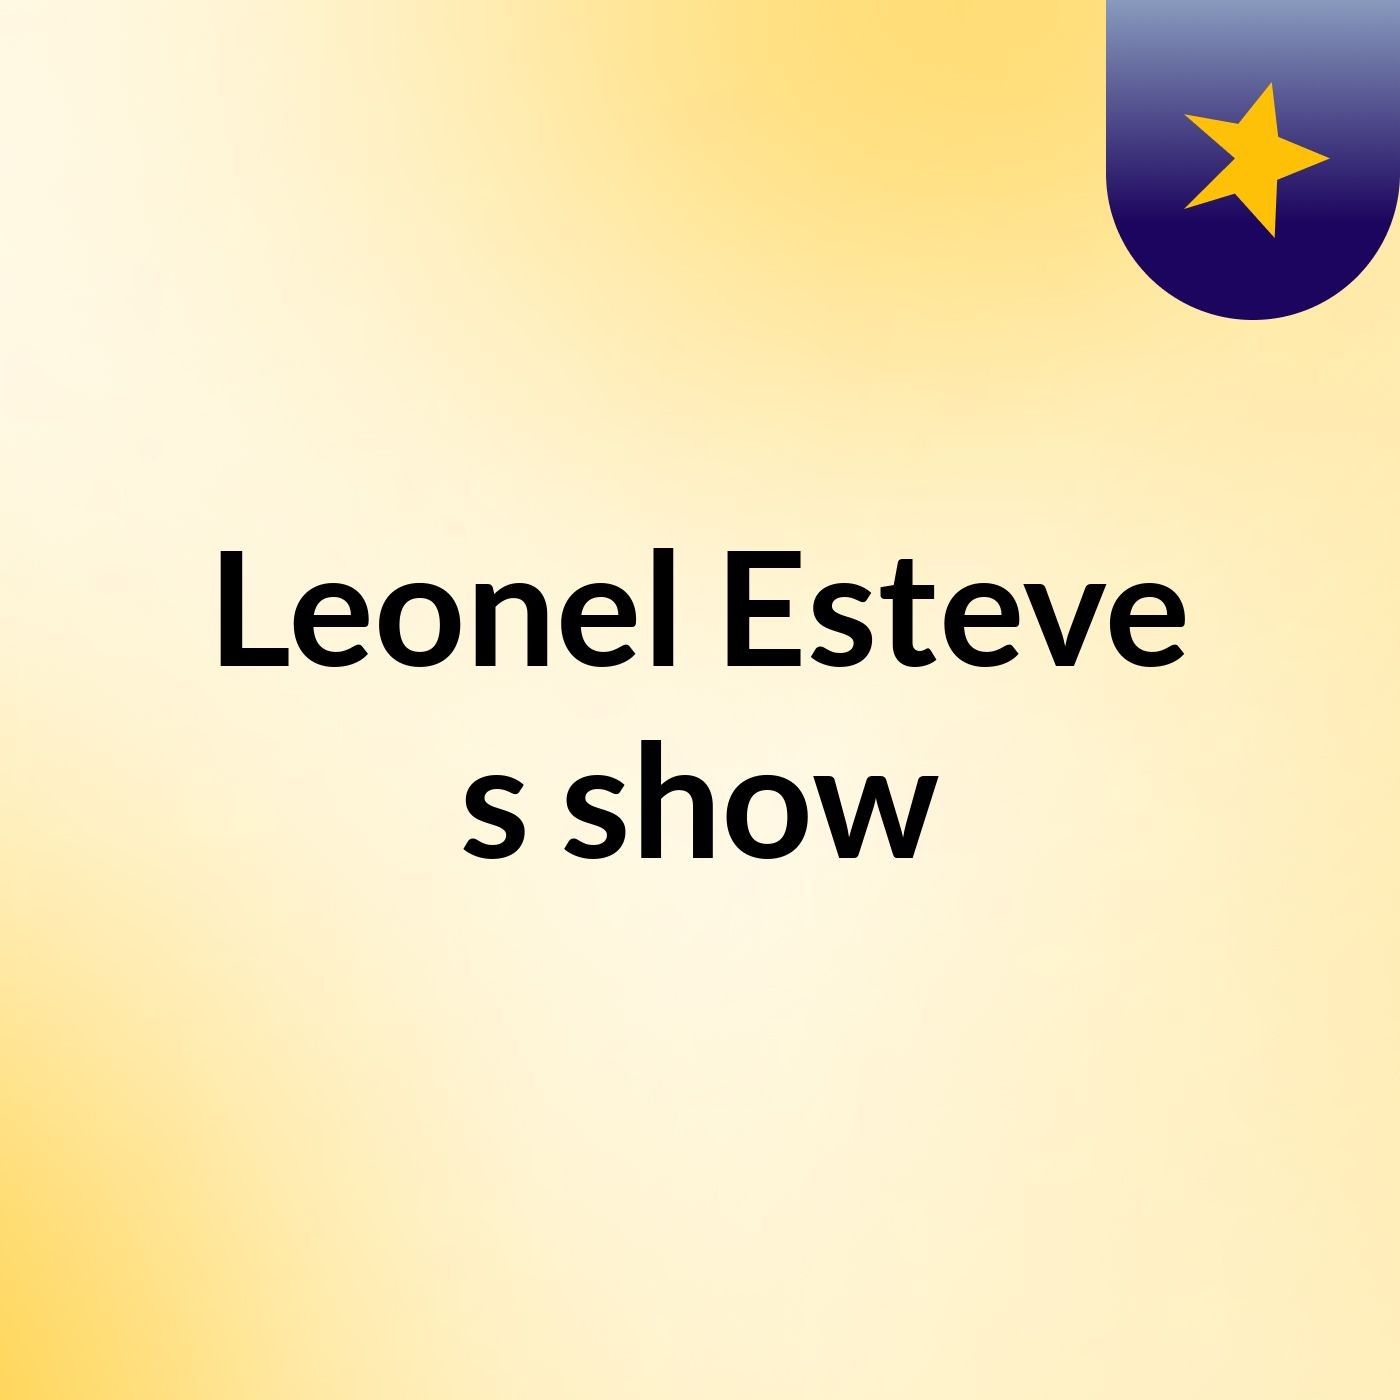 Leonel Esteve's show